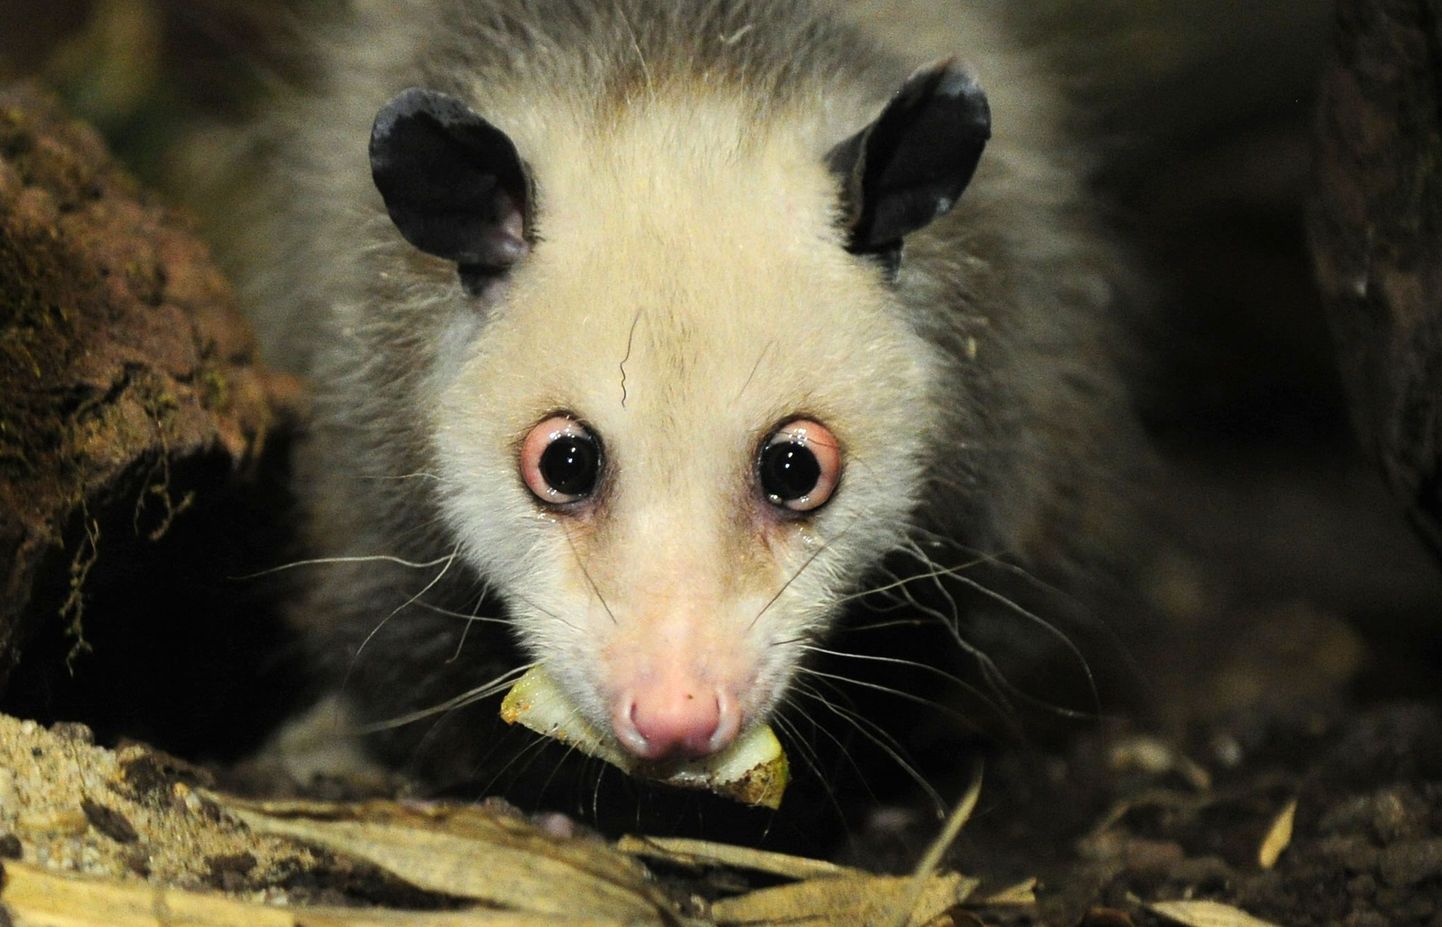 Opossum, pilt illustratiivne